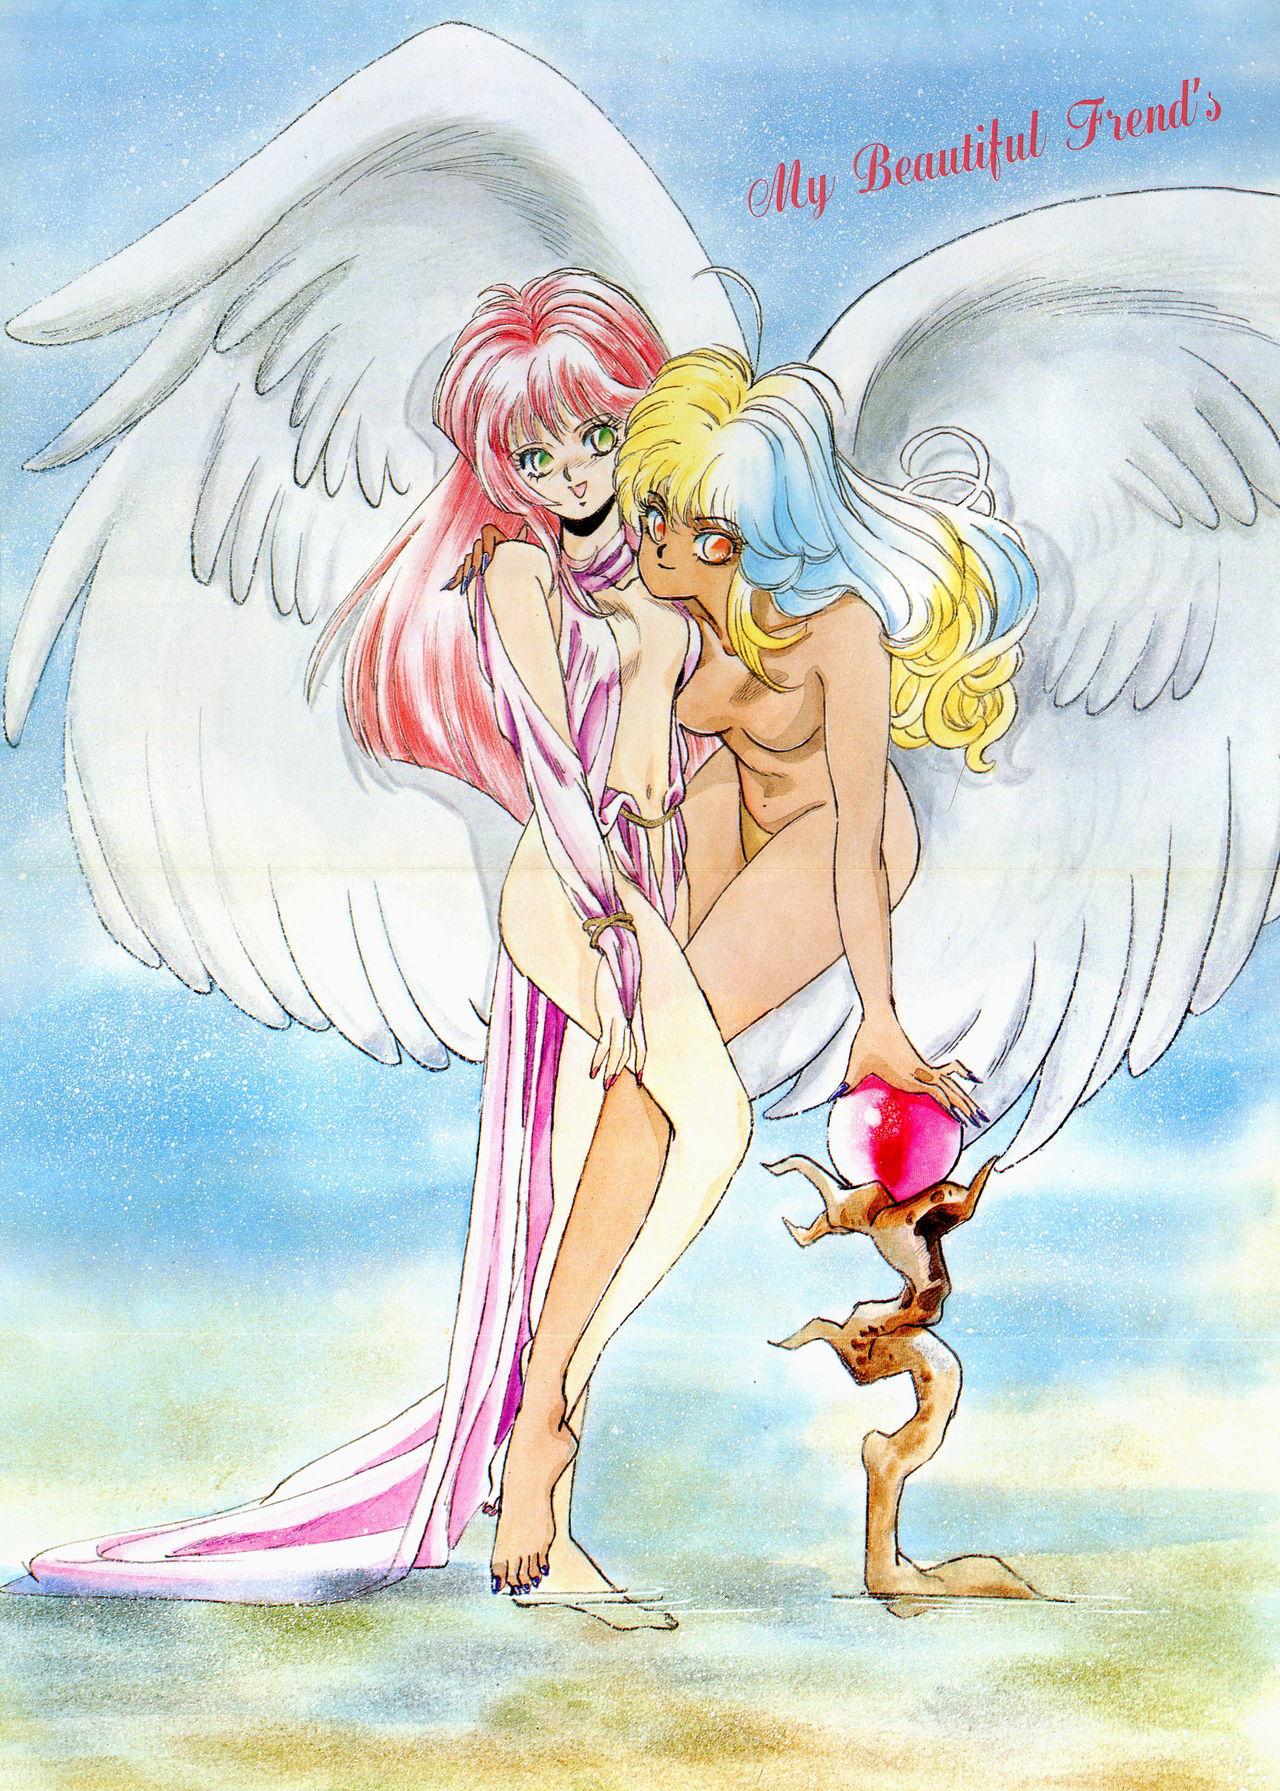 Bishoujo Anime Daizenshuu - Adult Animation Video Catalog 1991 2